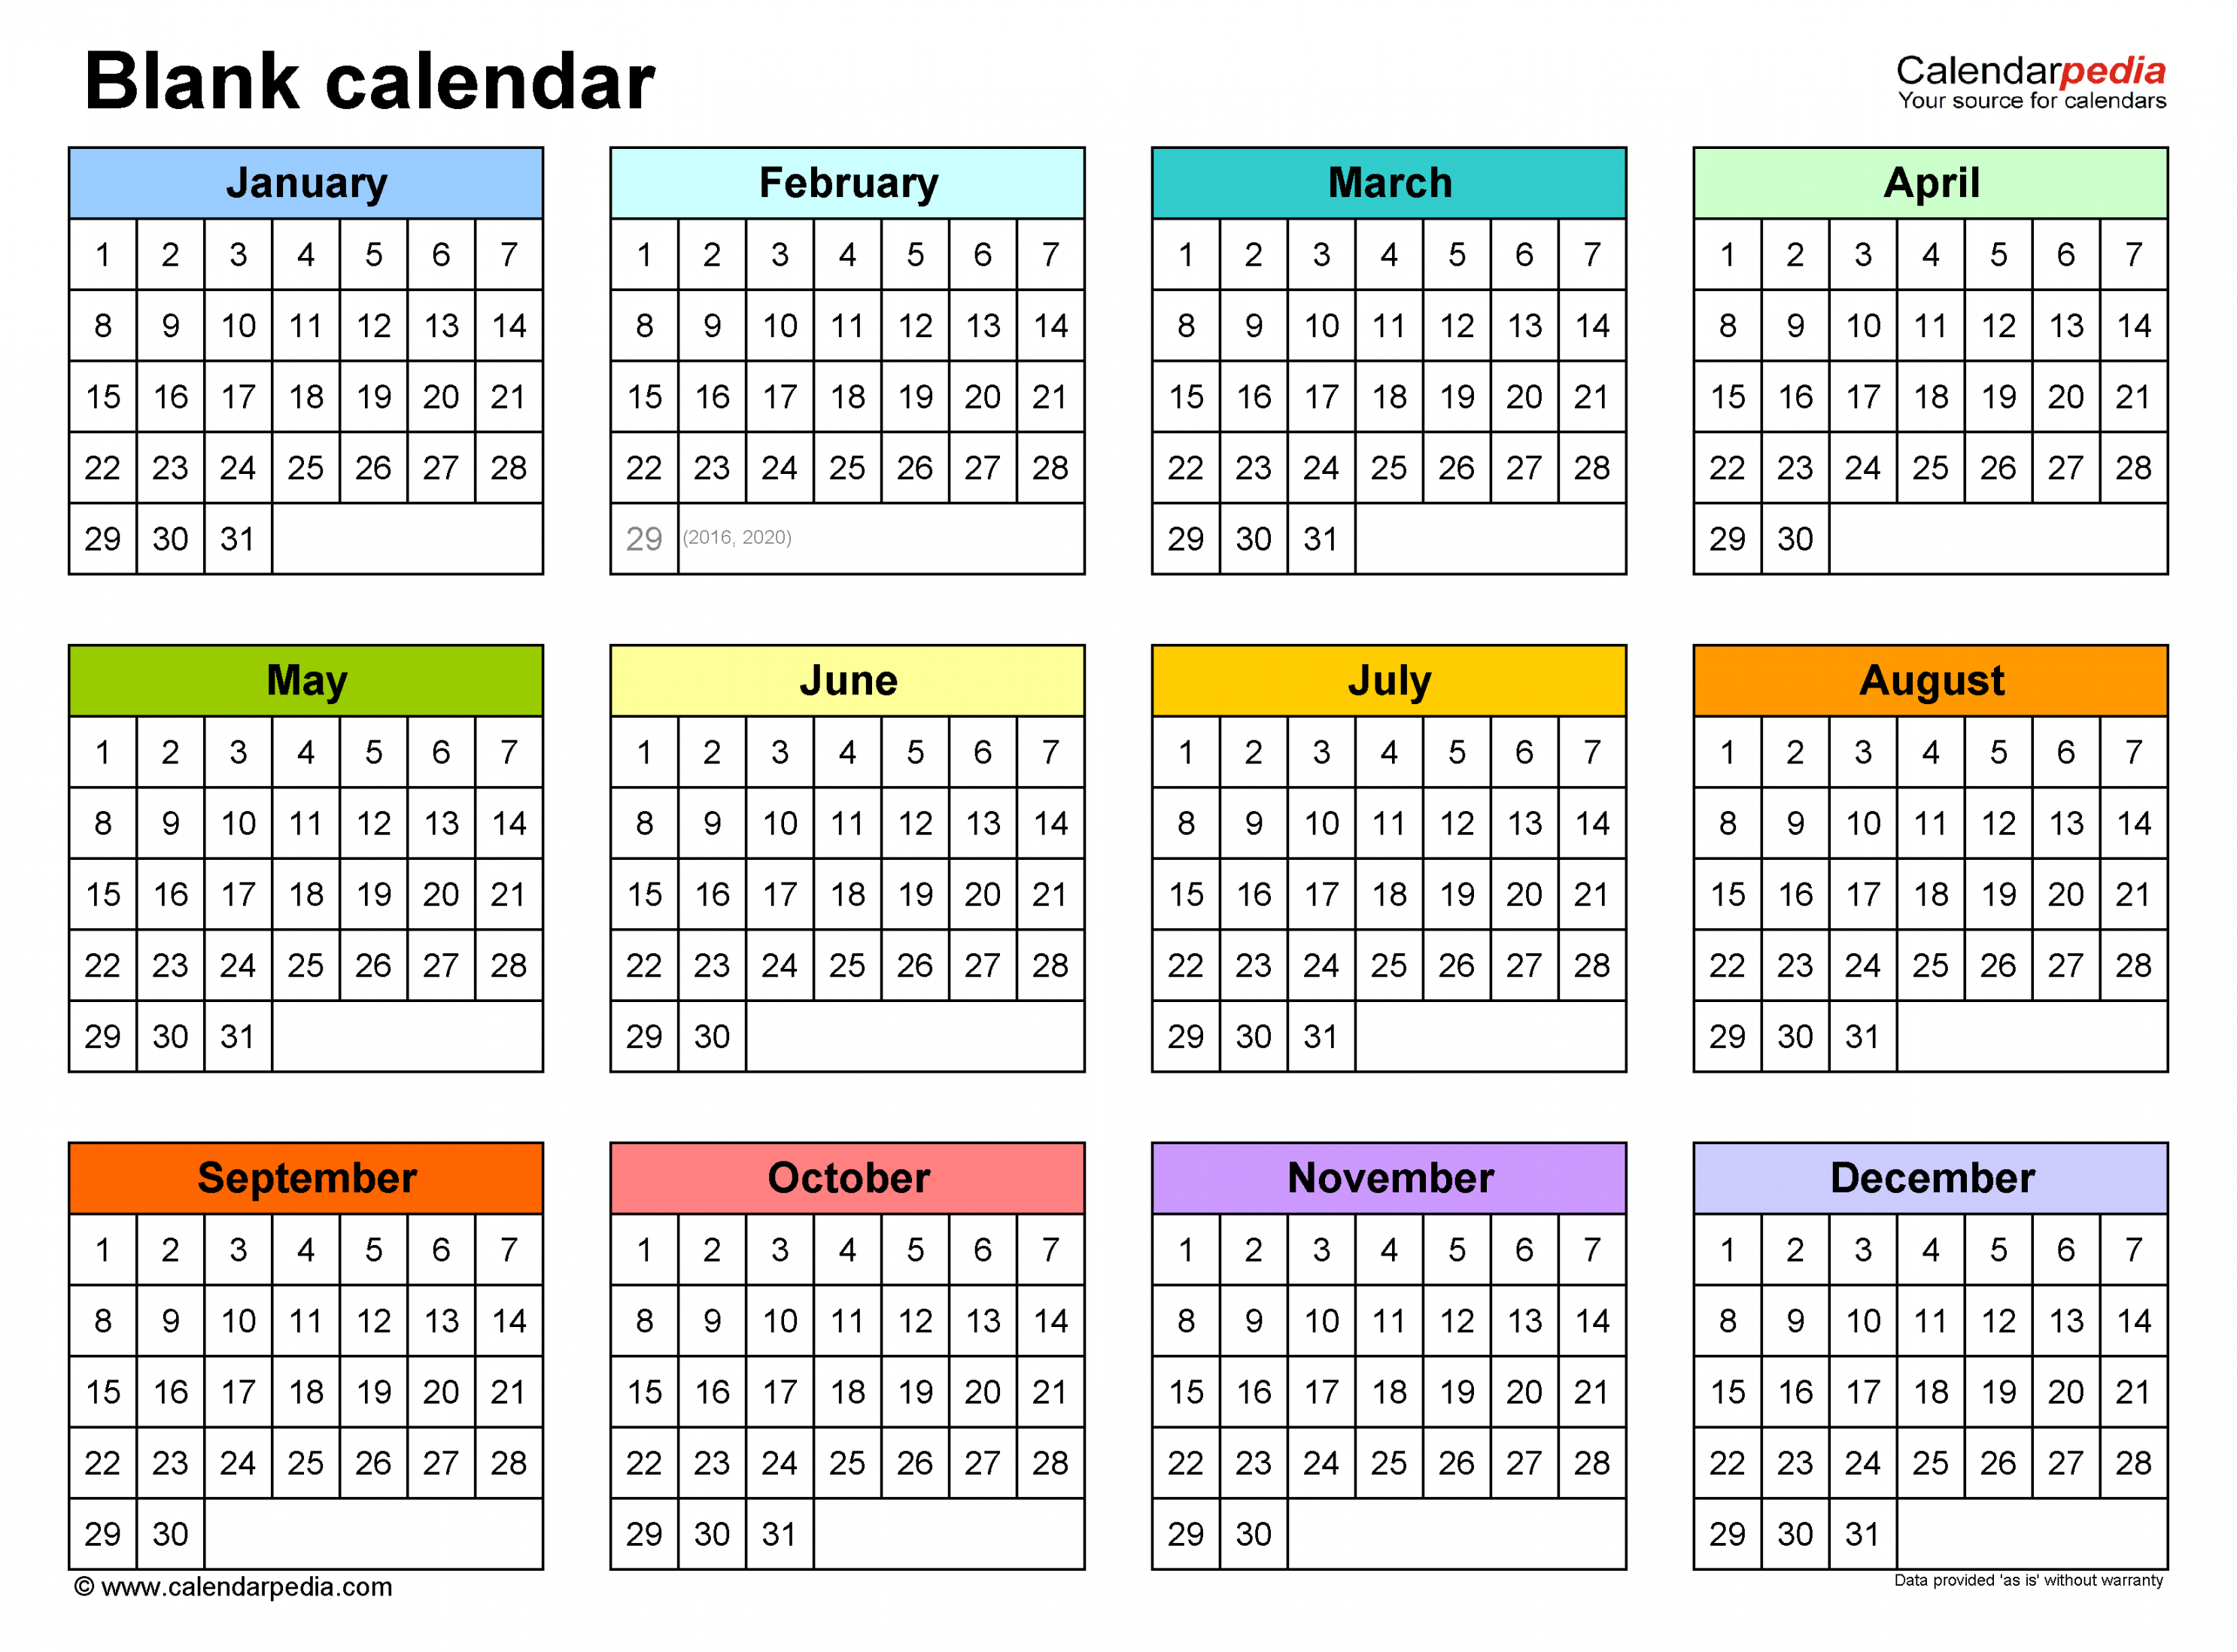 Blank Calendars - Free Printable PDF templates